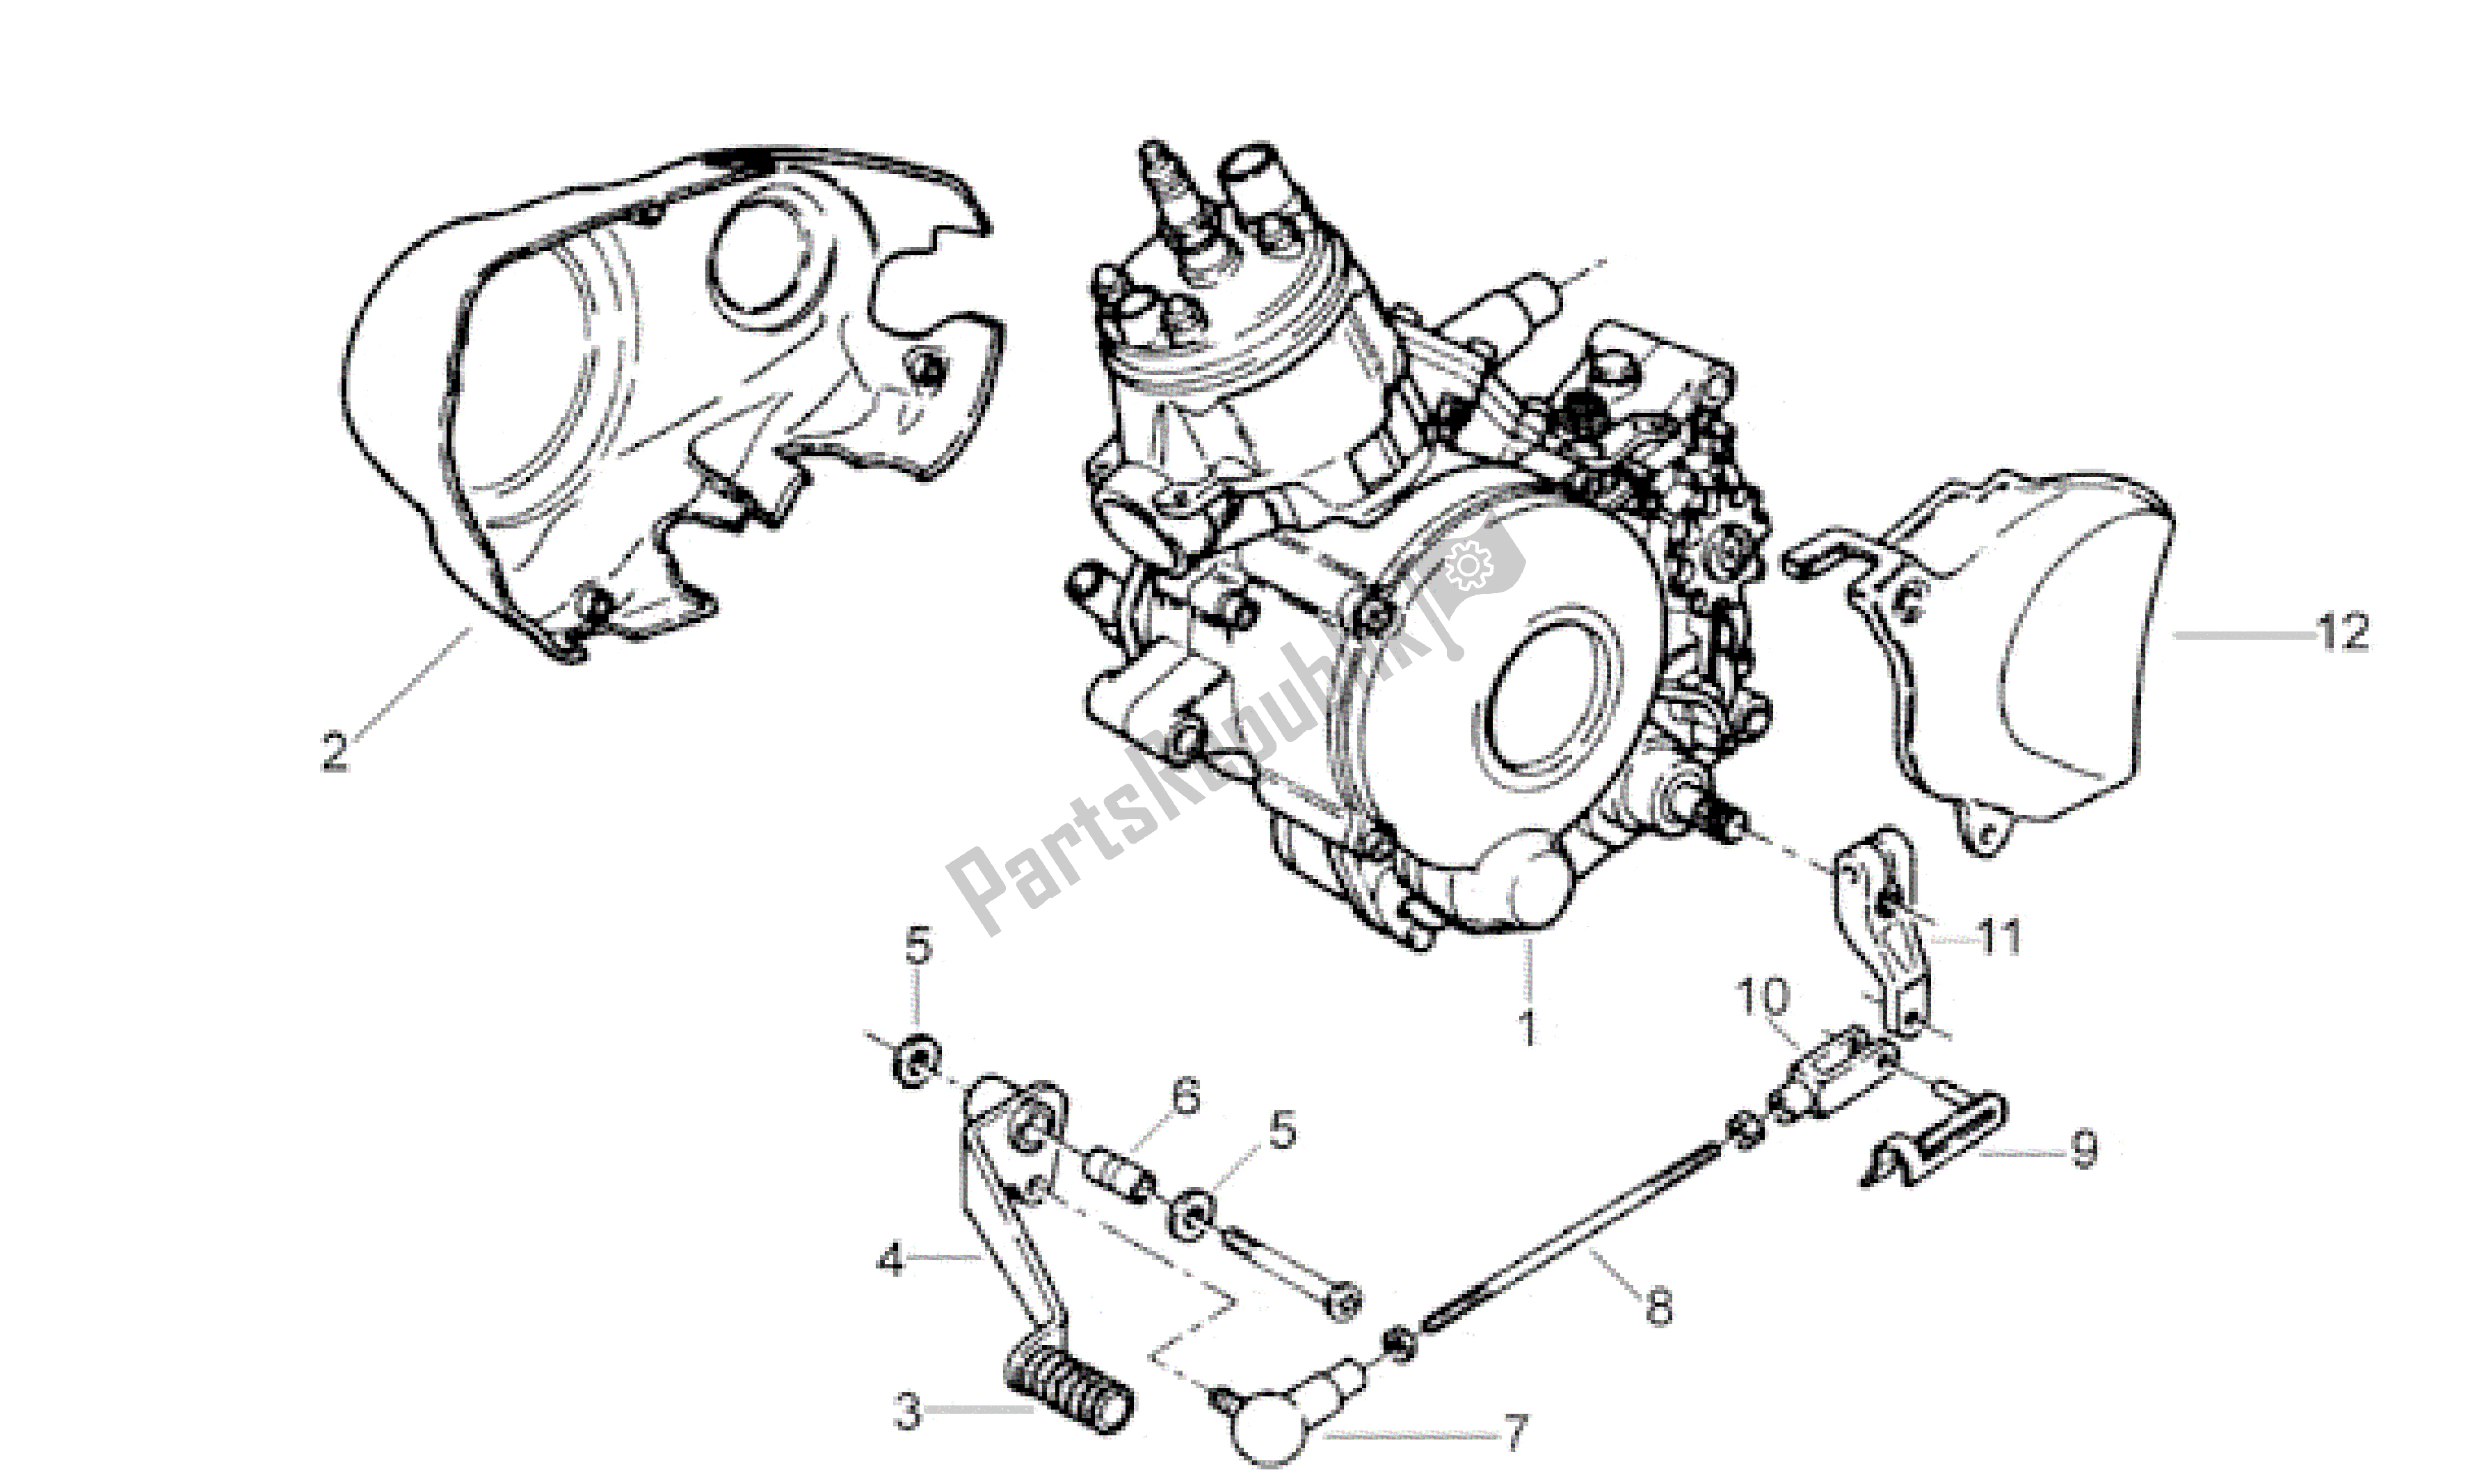 All parts for the Engine Ii of the Aprilia Minarelli 50 1991 - 2000